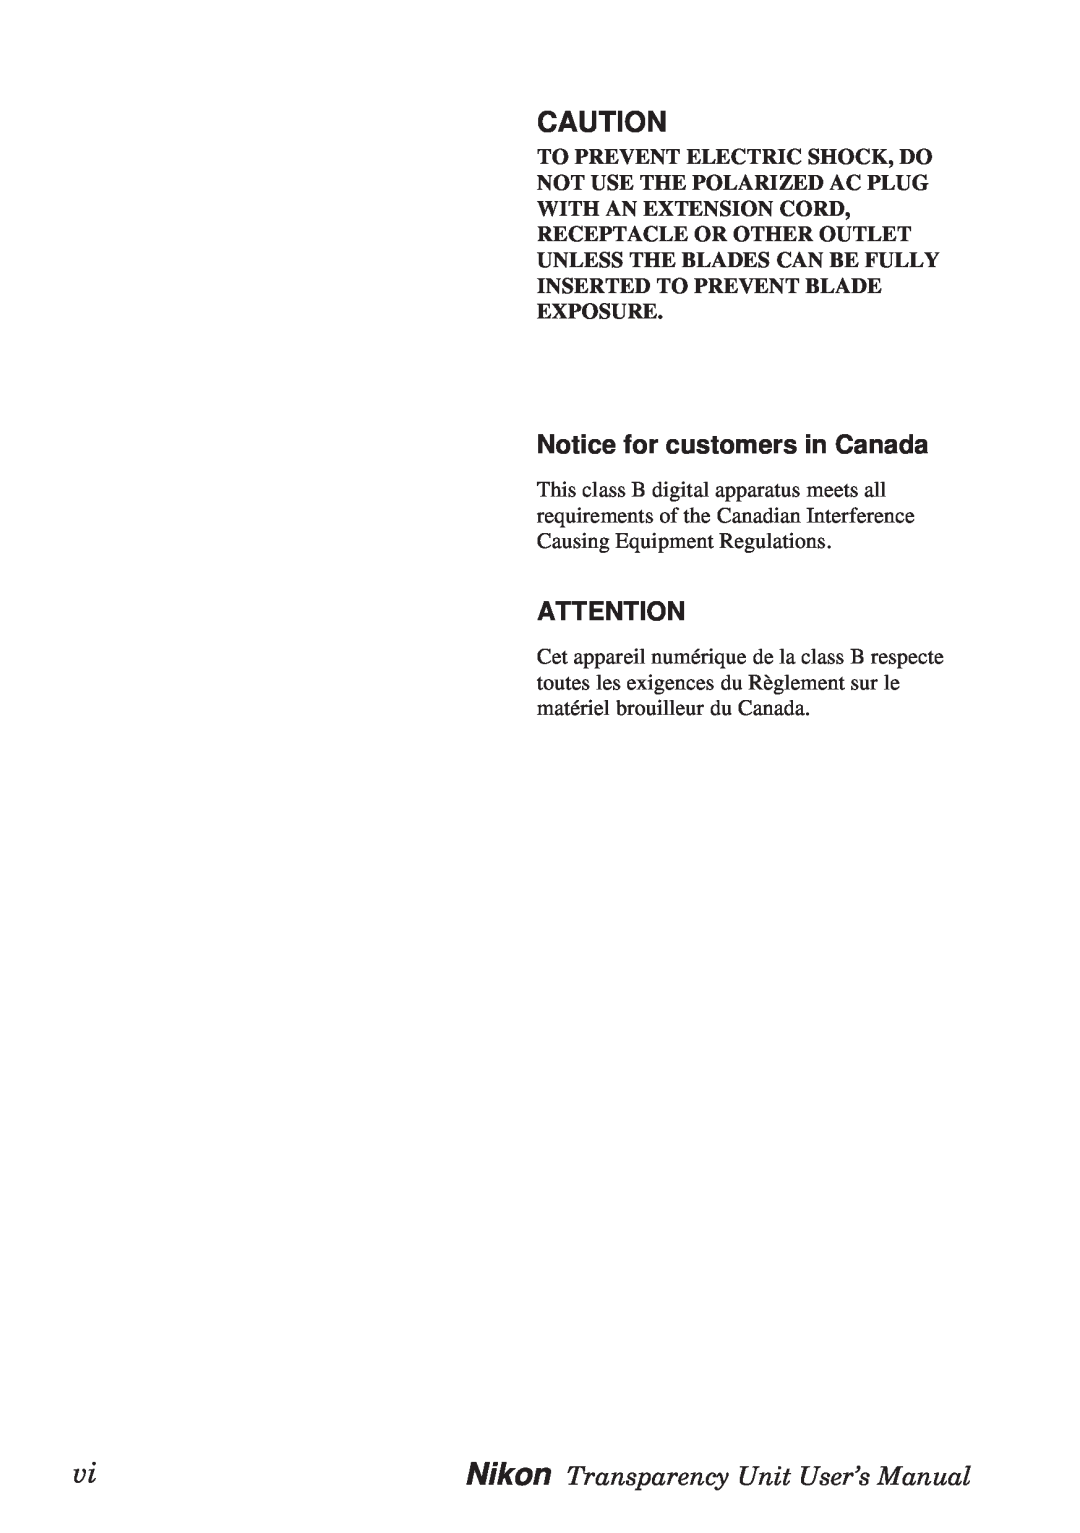 Nikon manual Notice for customers in Canada, Nikon Transparency Unit User’s Manual 